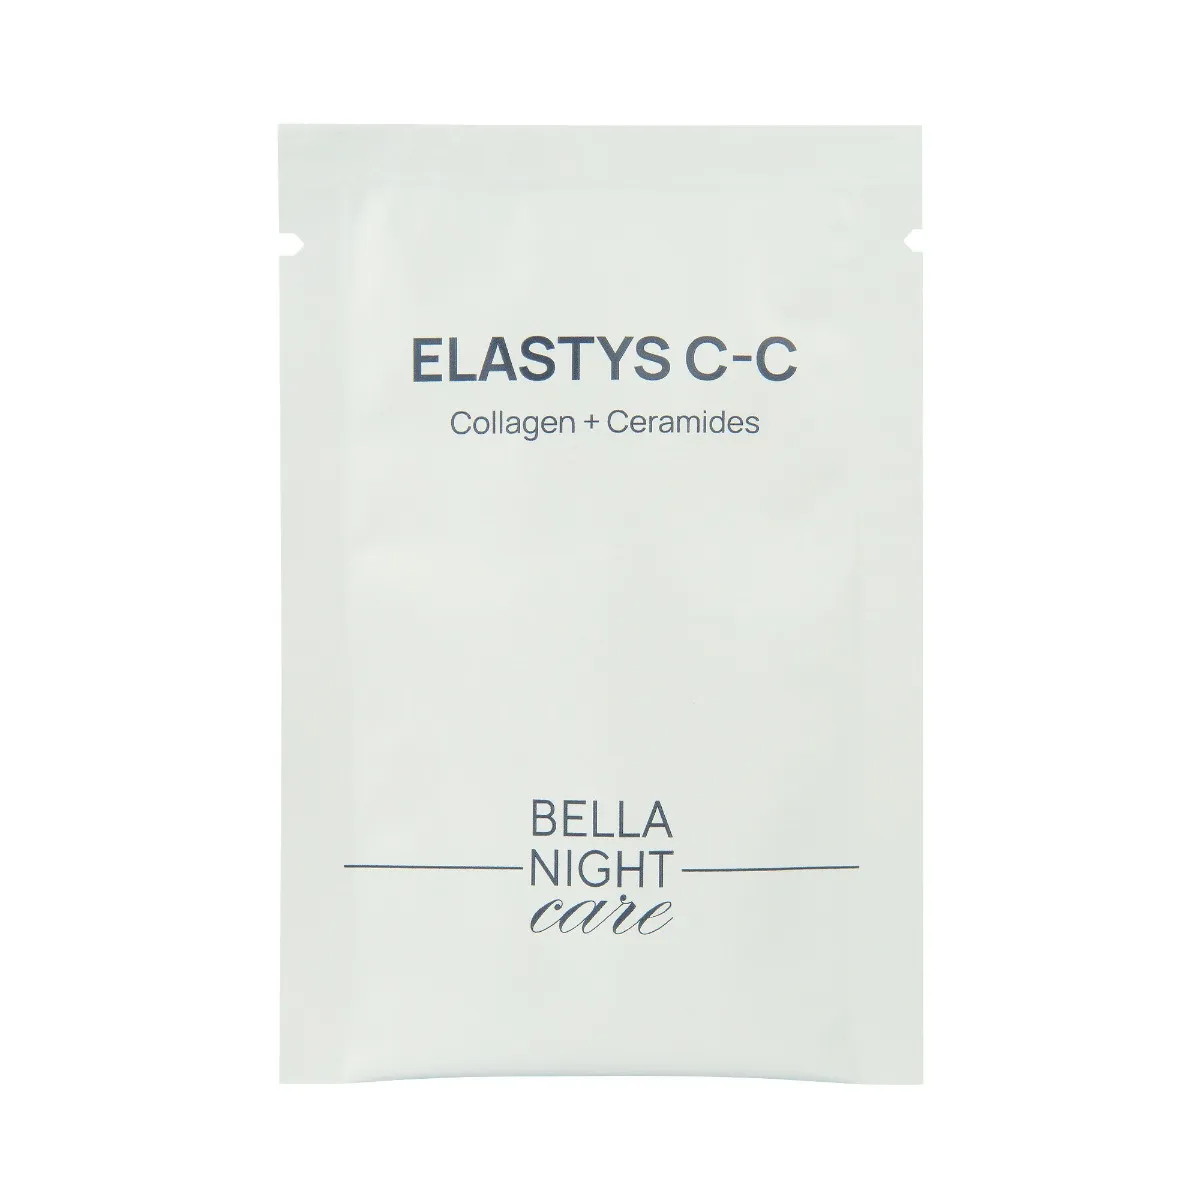 Bella NIGHT Care ELASTYS C-C 30 sáčků